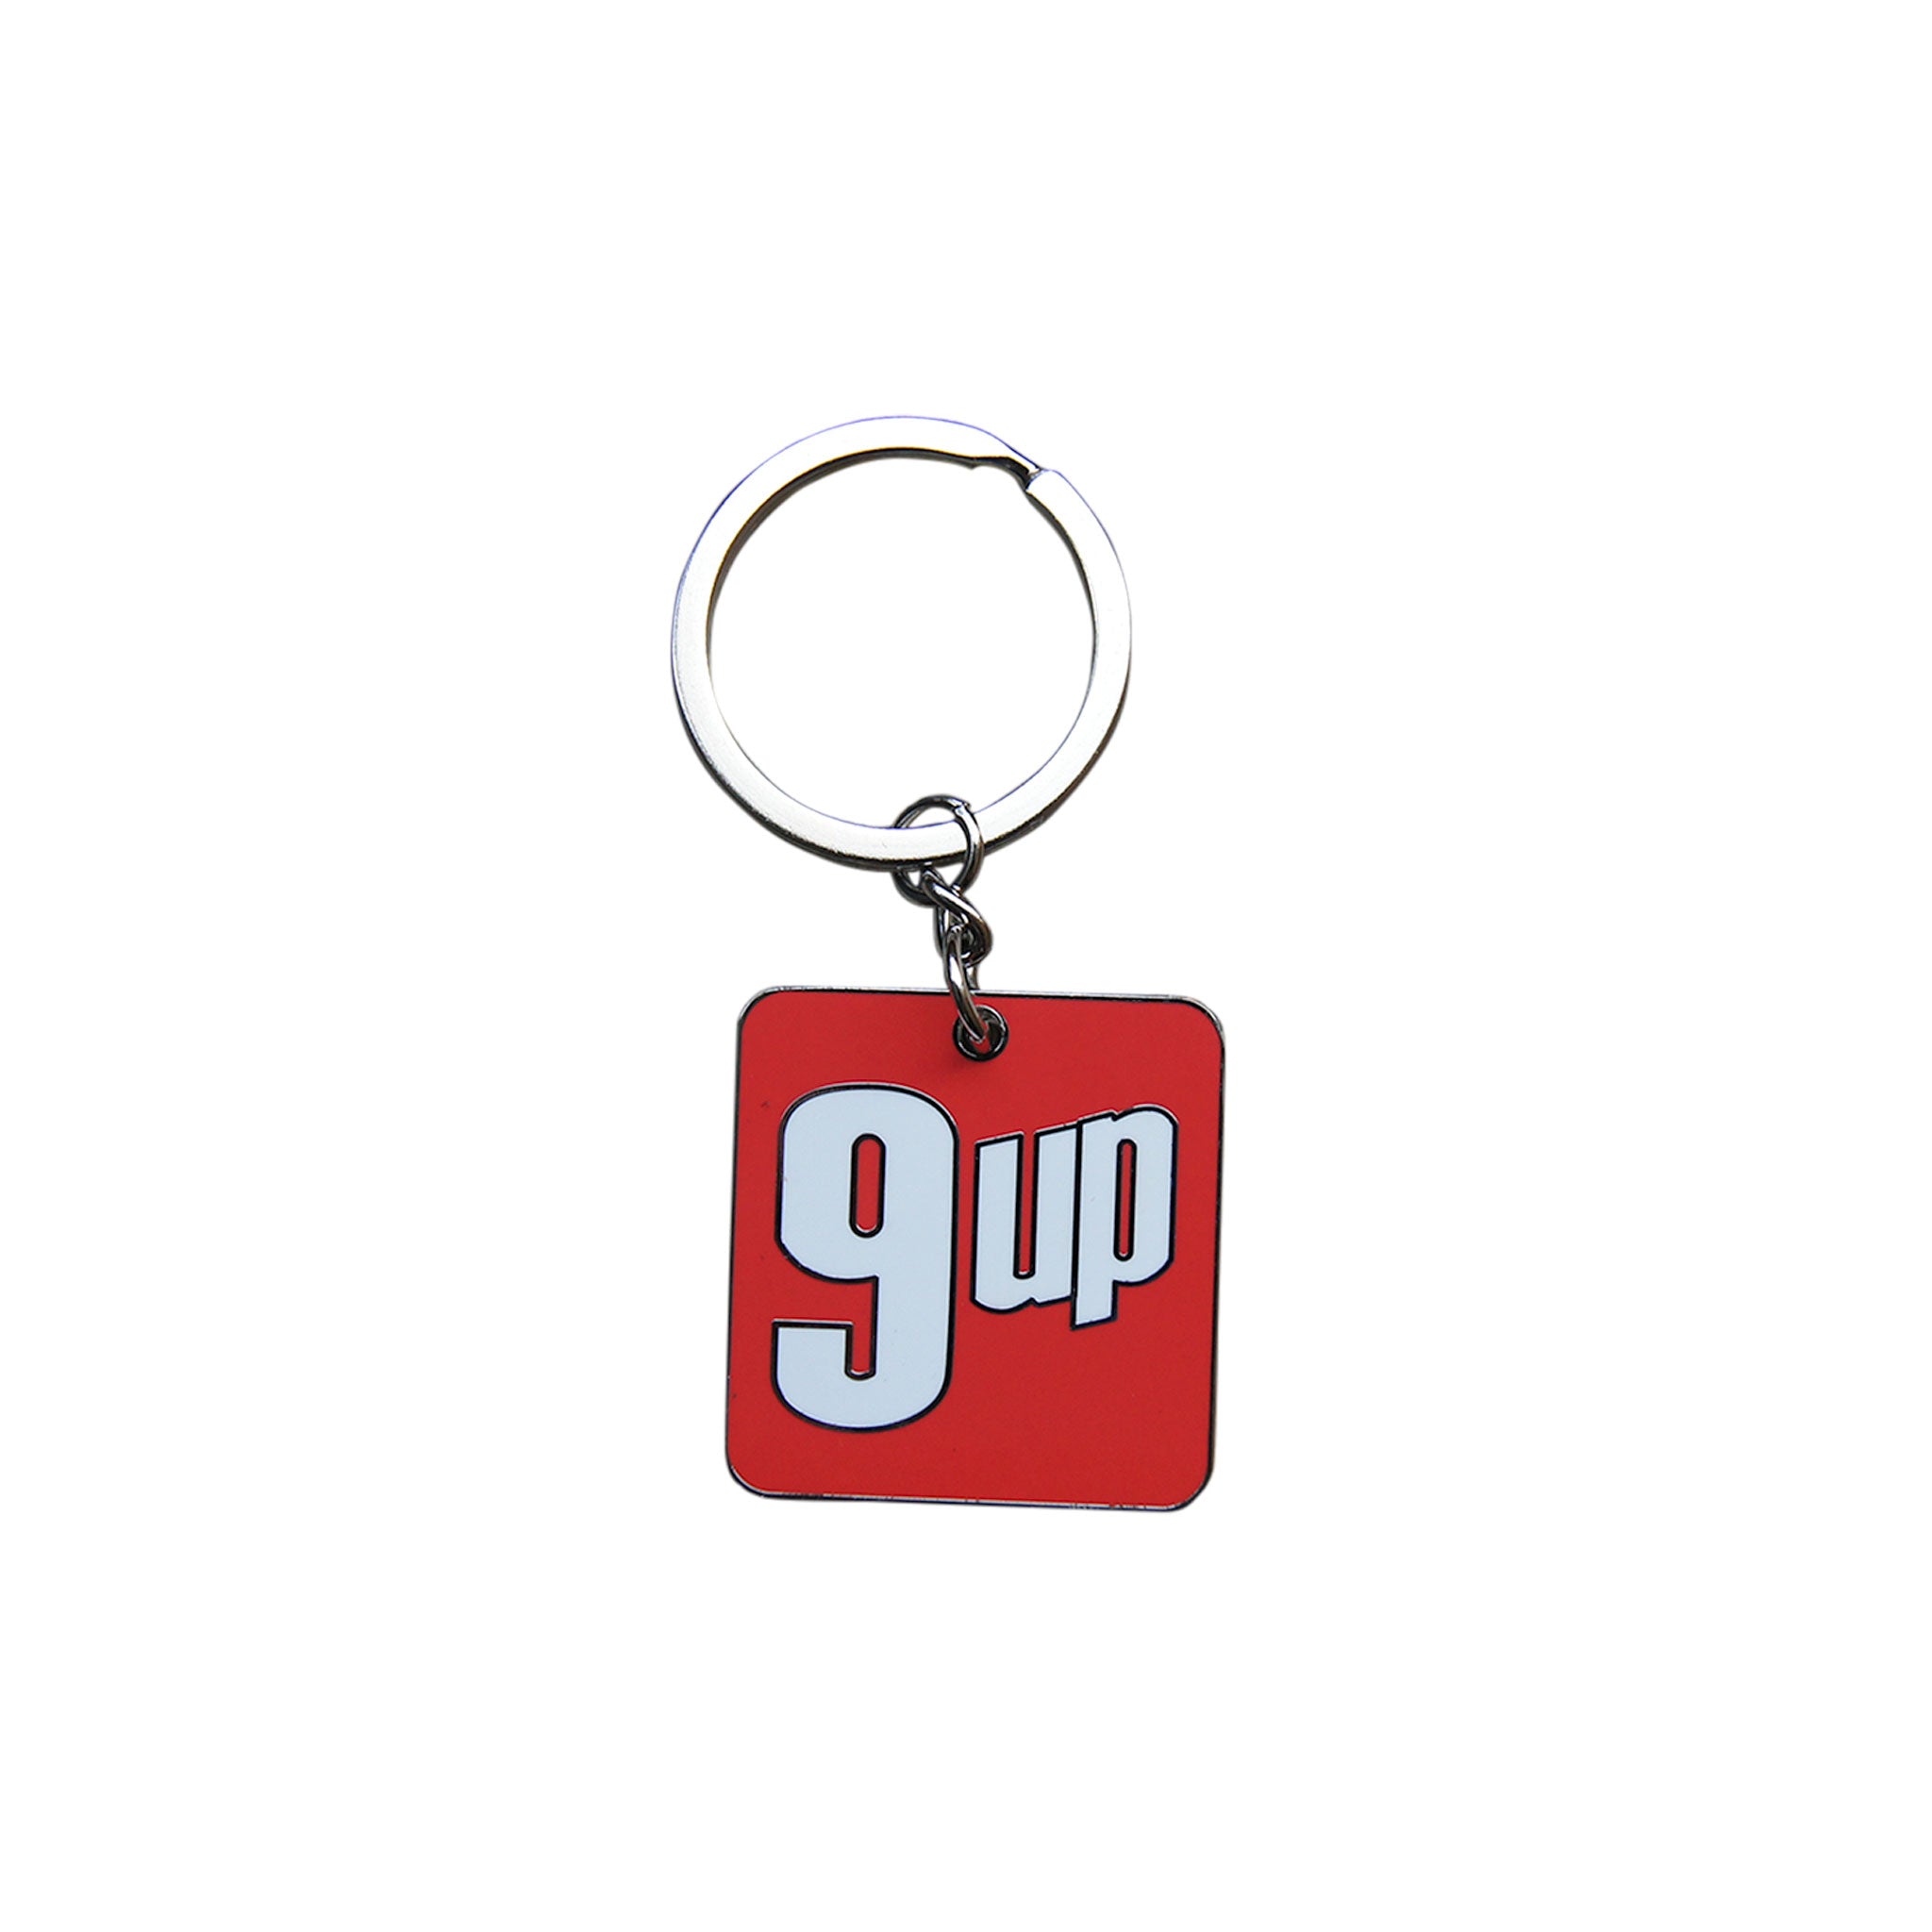 9UP Keychain